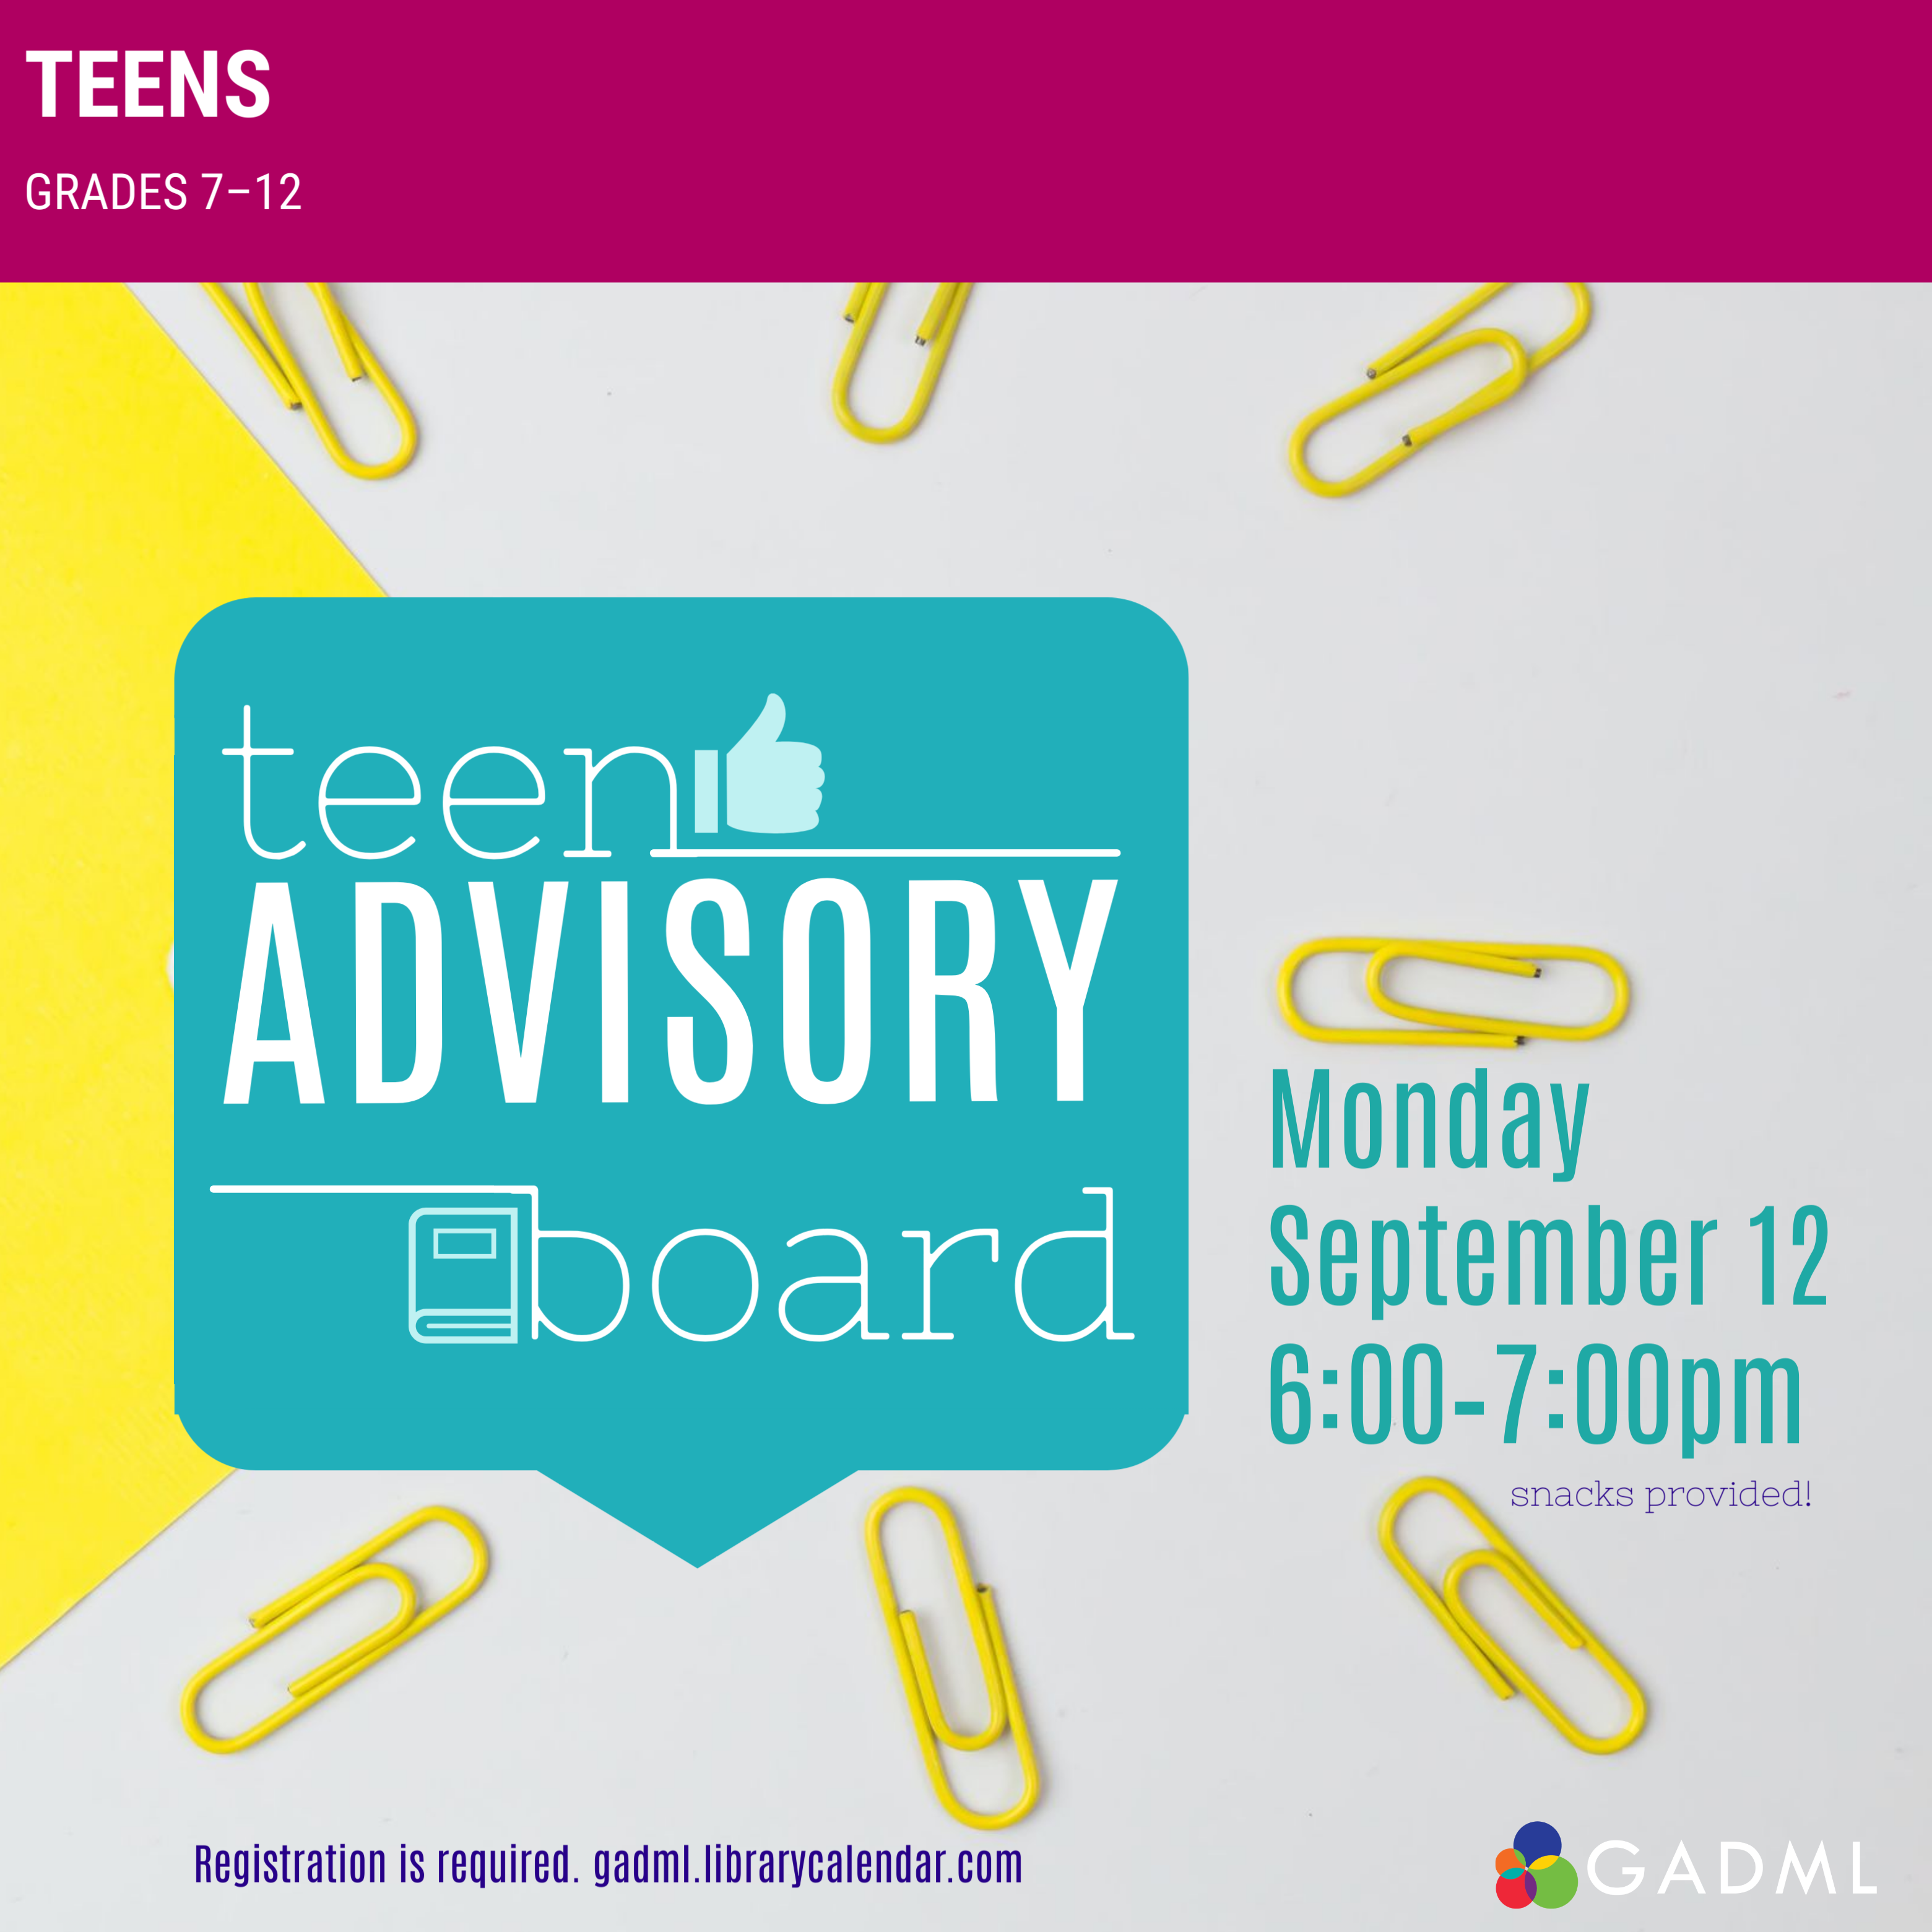 Teen advisory board